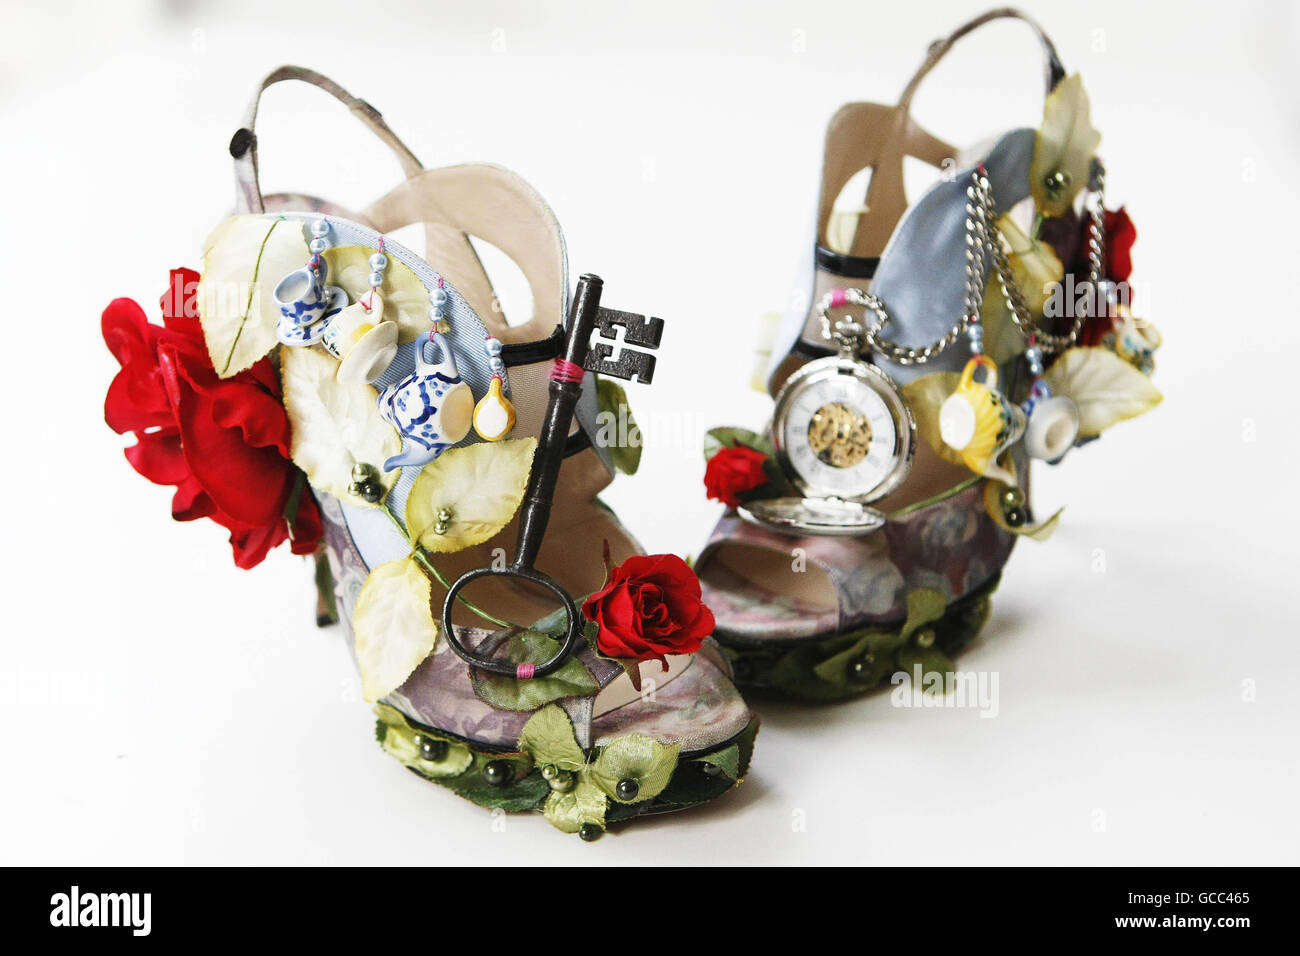 Alice in Wonderland shoes Stock Photo - Alamy